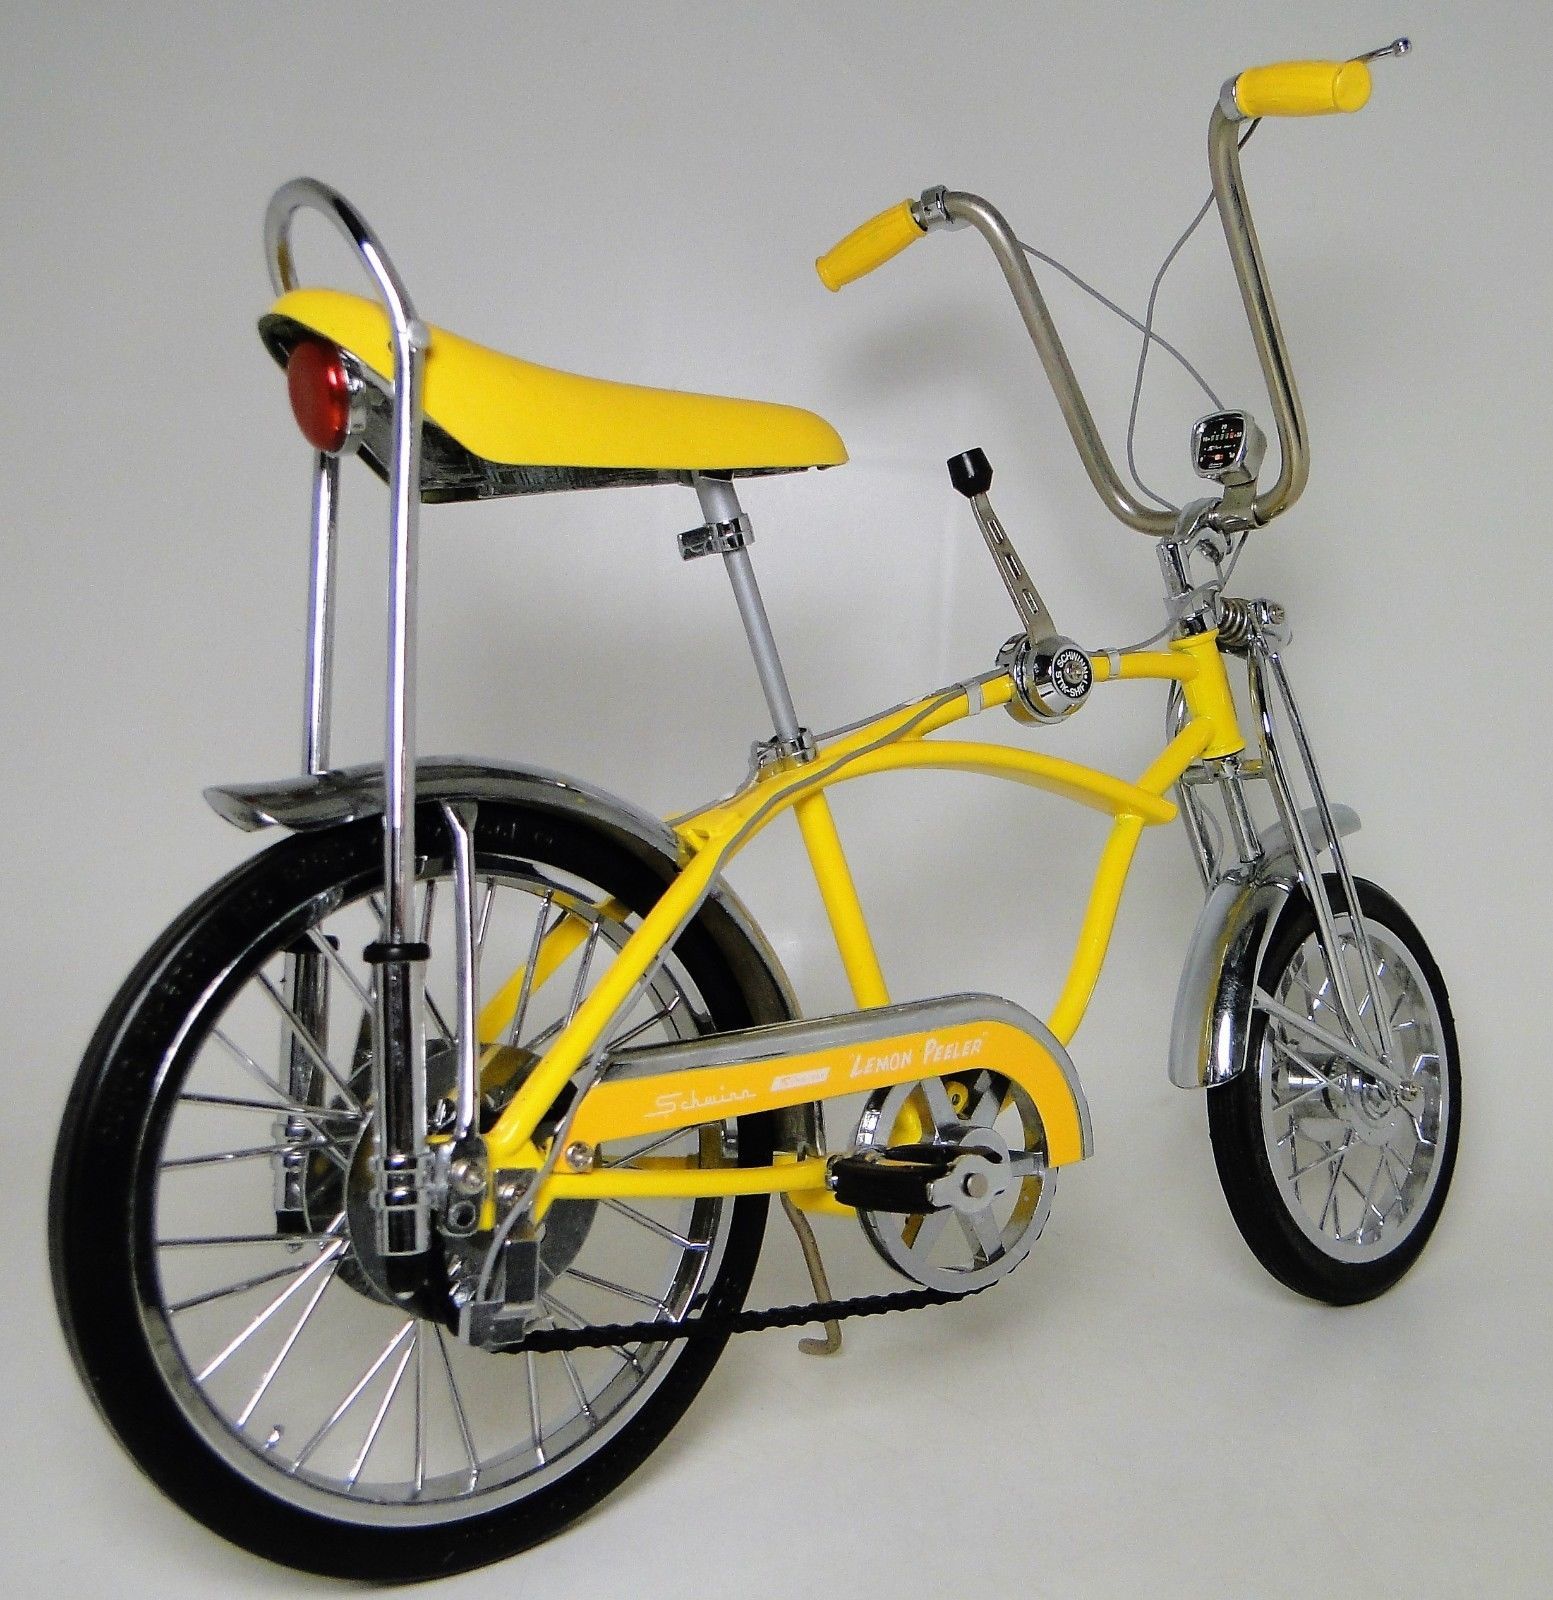 Schwinn 1 Vintage Bicycle Bike 1960s Antique Classic Cycle Metal READ DESCRIPTI Vintage Bicycles